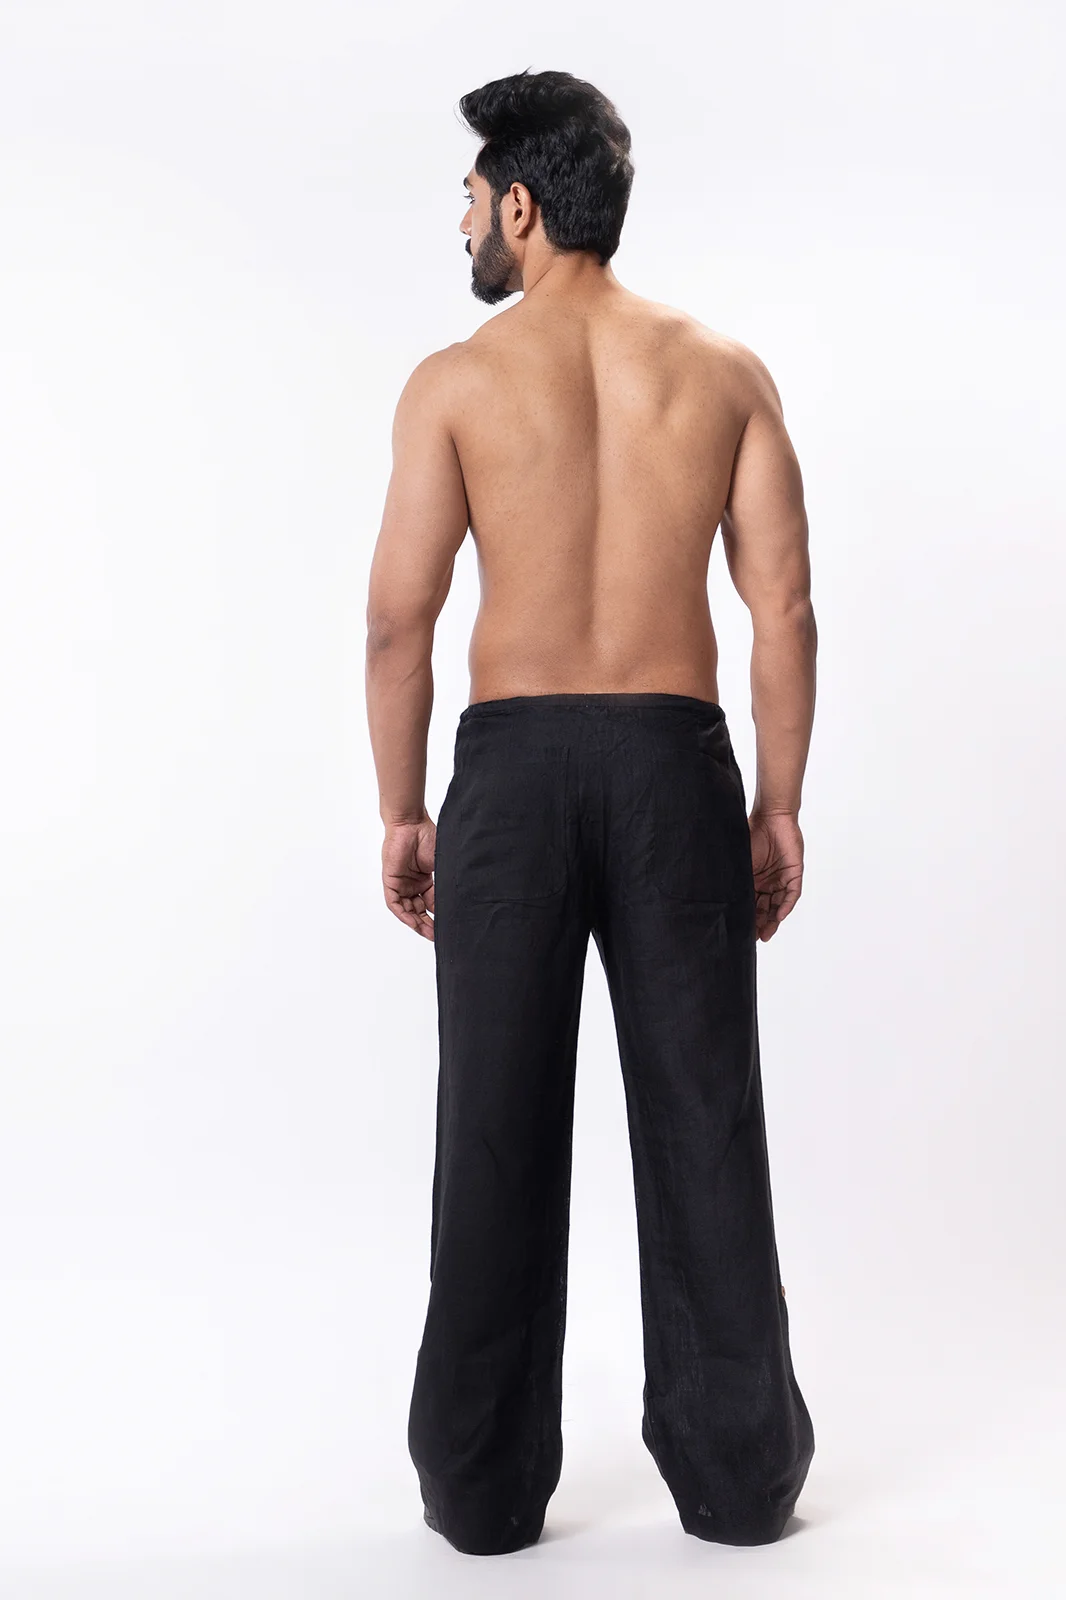 MEN'S LINEN PANTS, Linen Pants Men, Black Pants, Handmade Pants